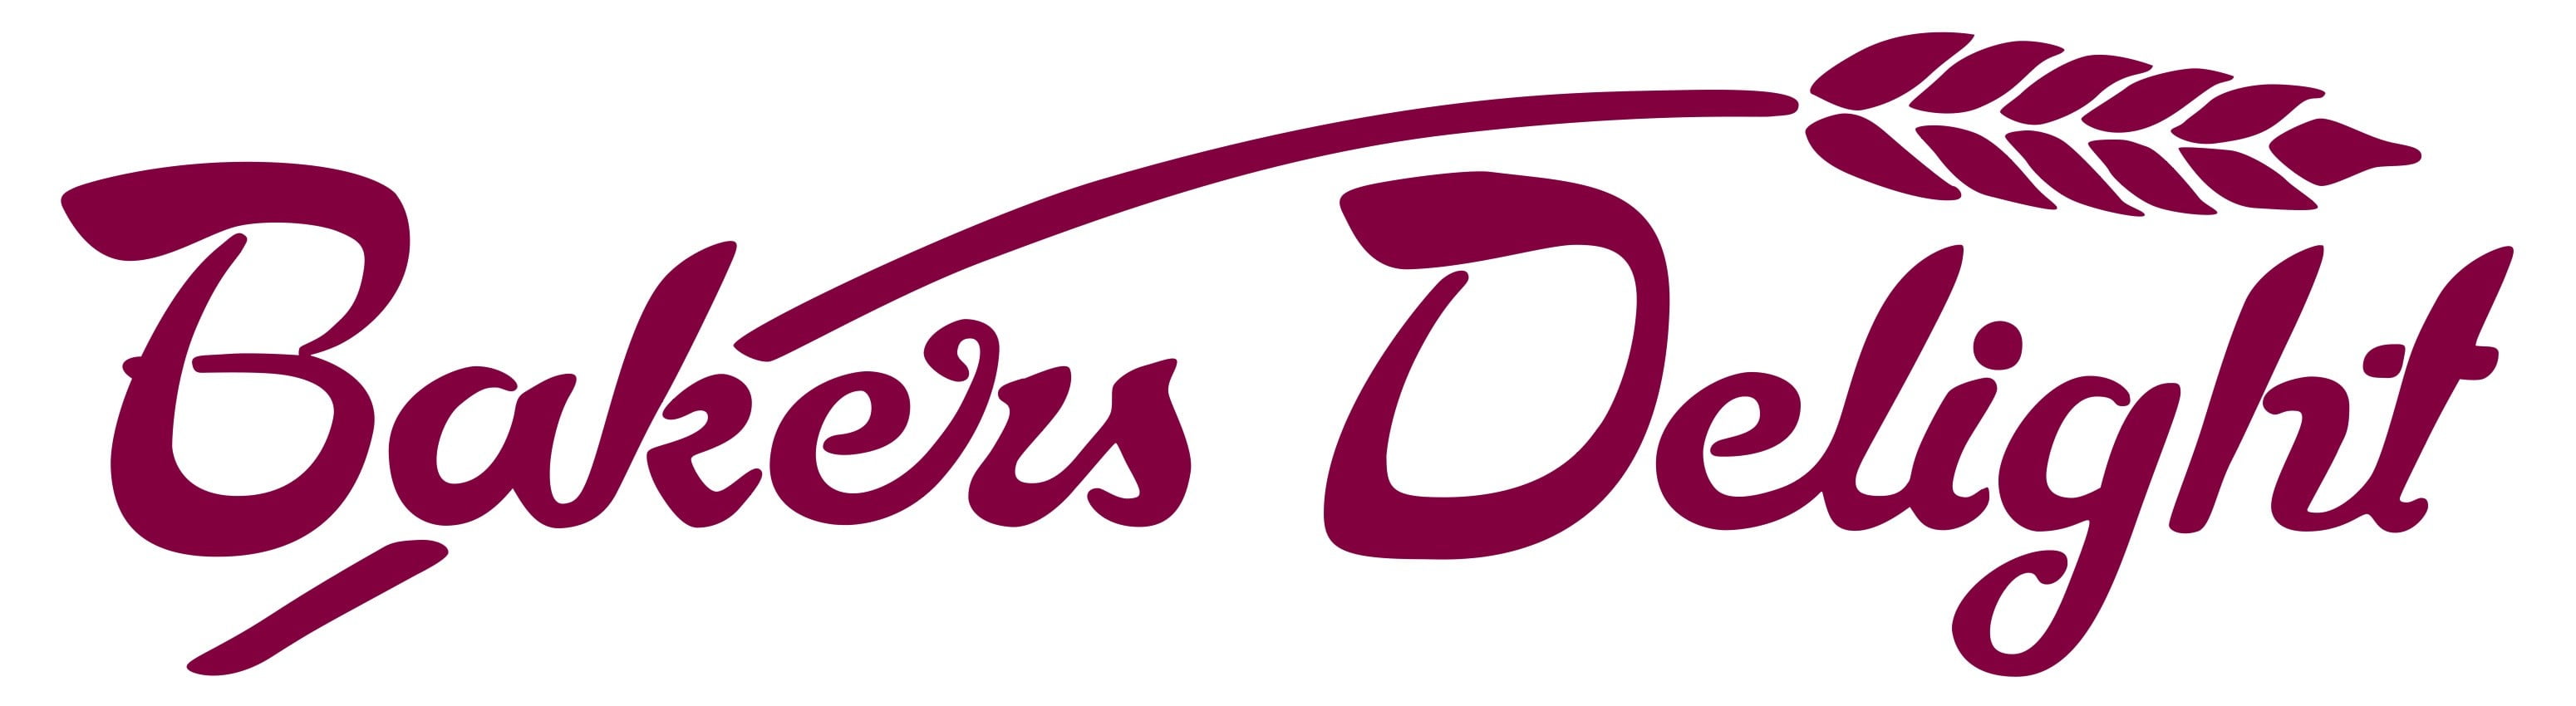 Bakers-Delight-Logo